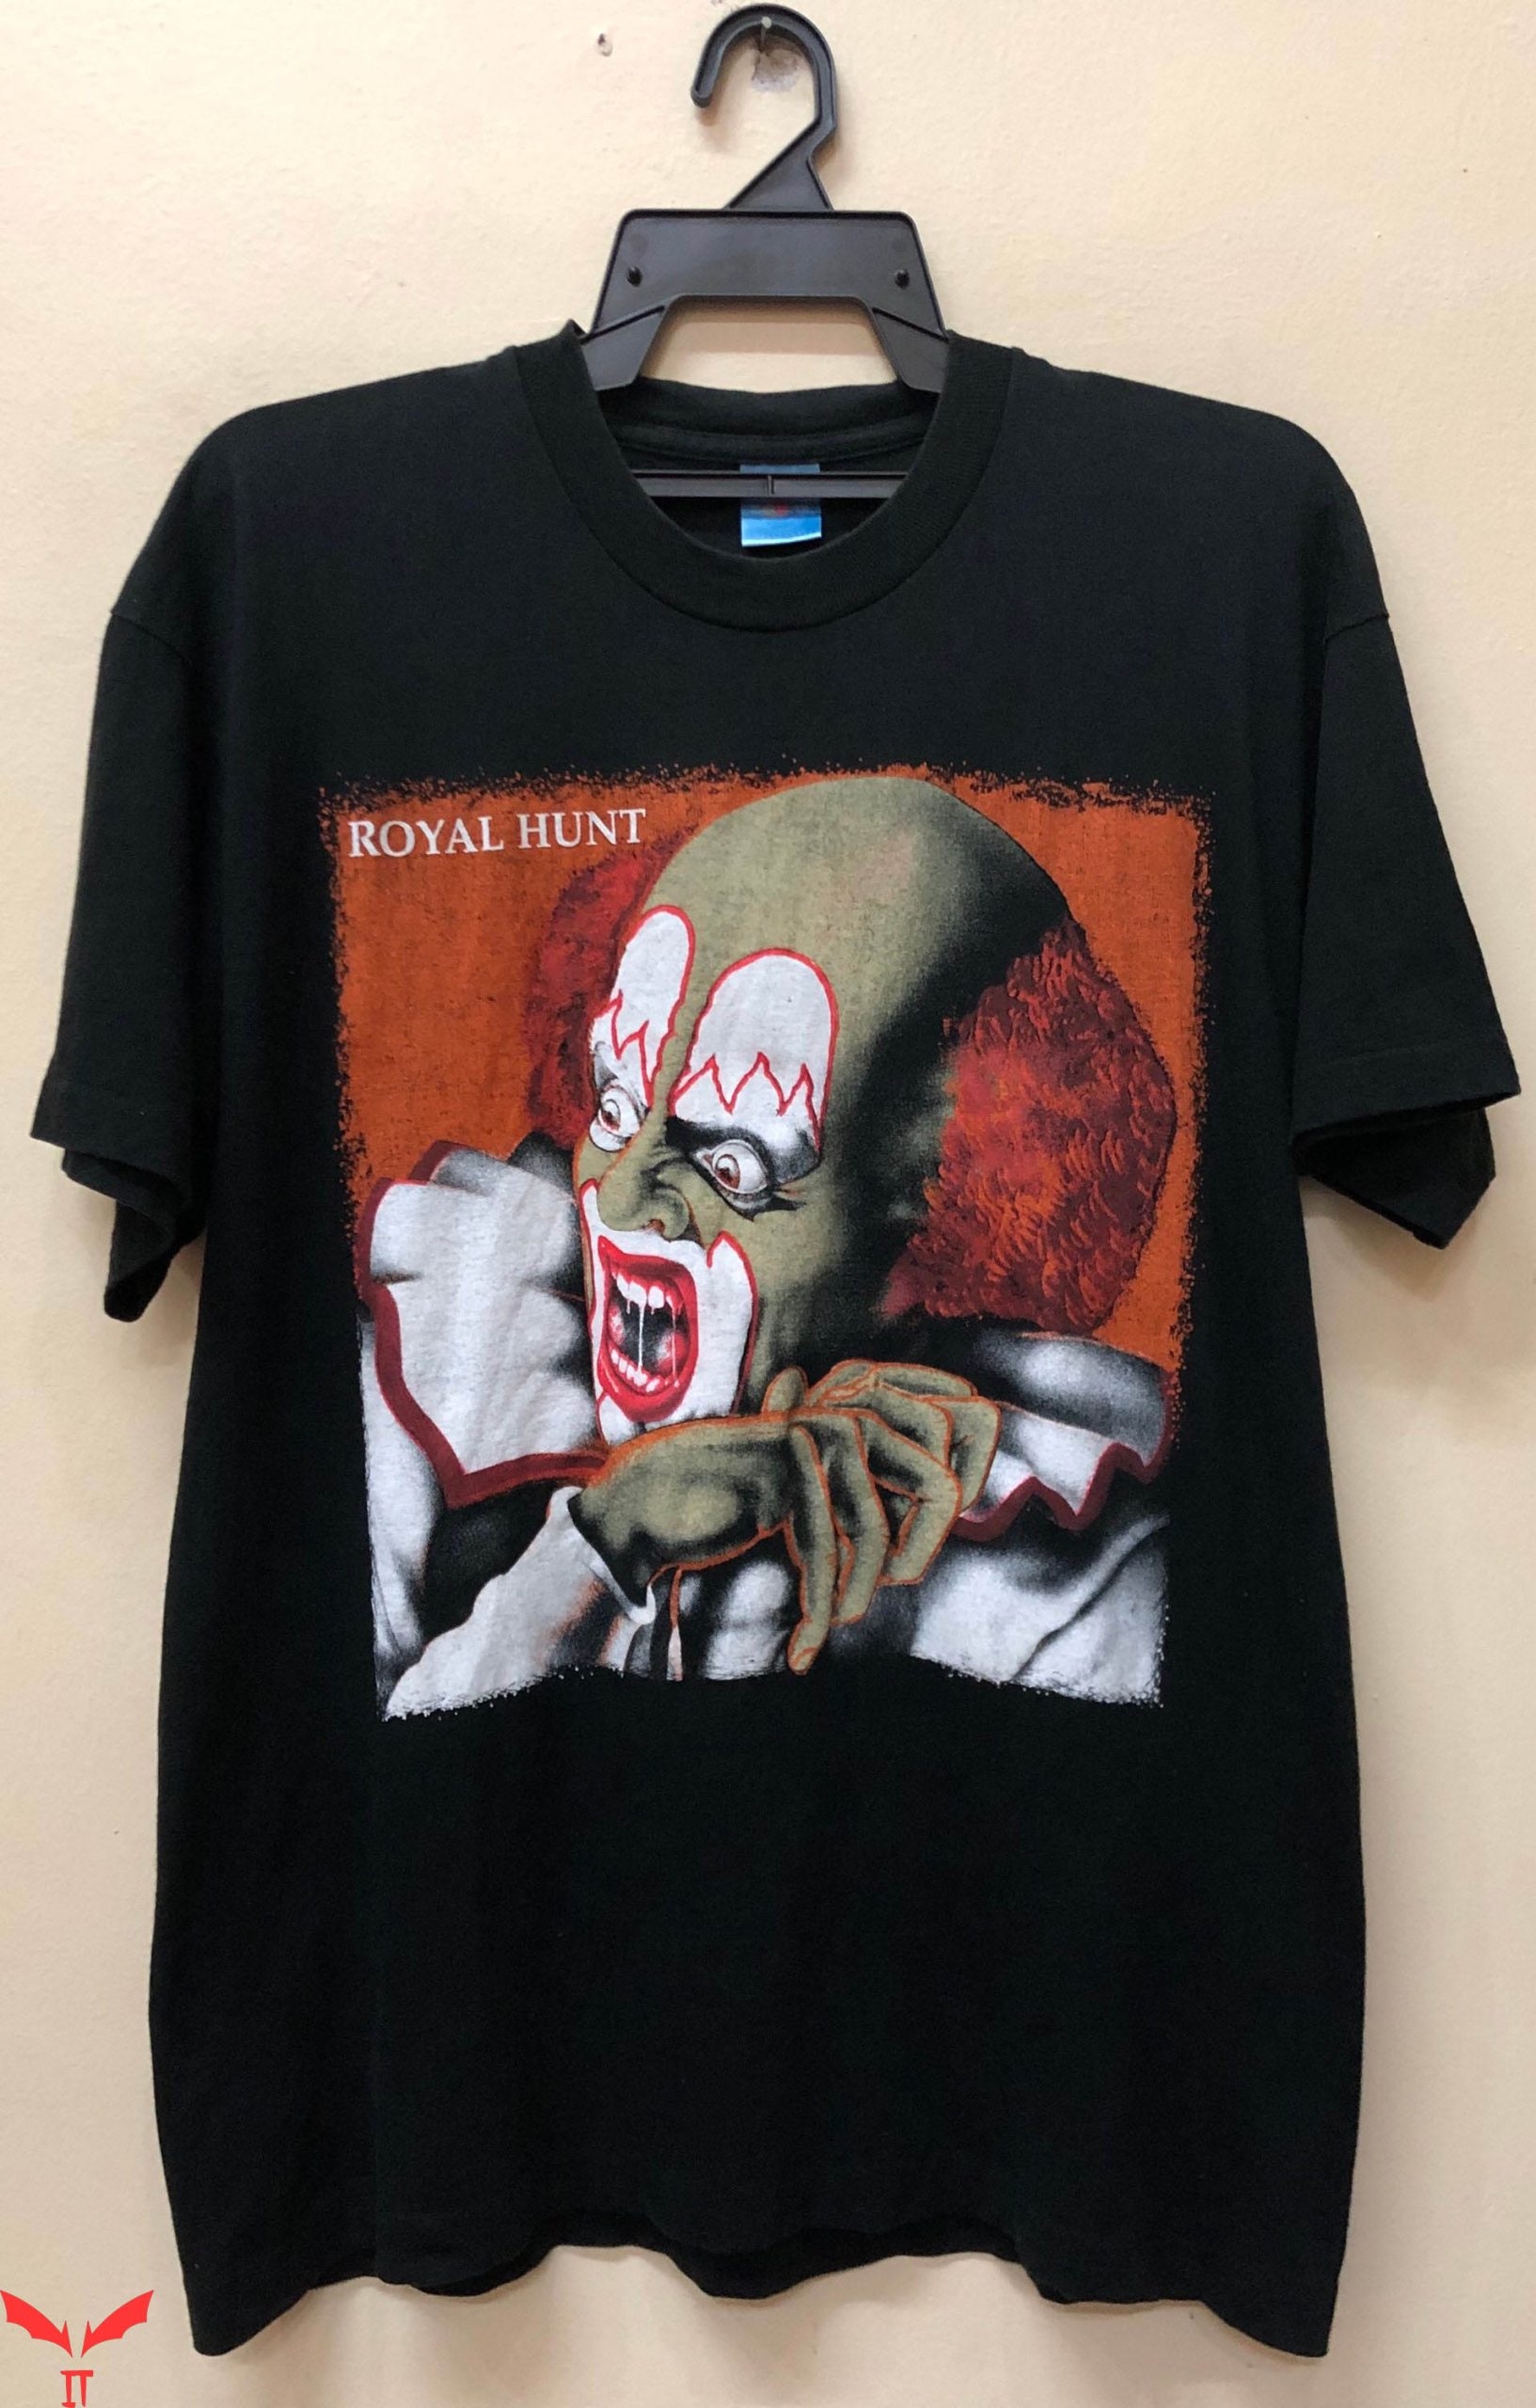 IT The Clown T-Shirt 90s Royal Hunt Clown In The Mirror